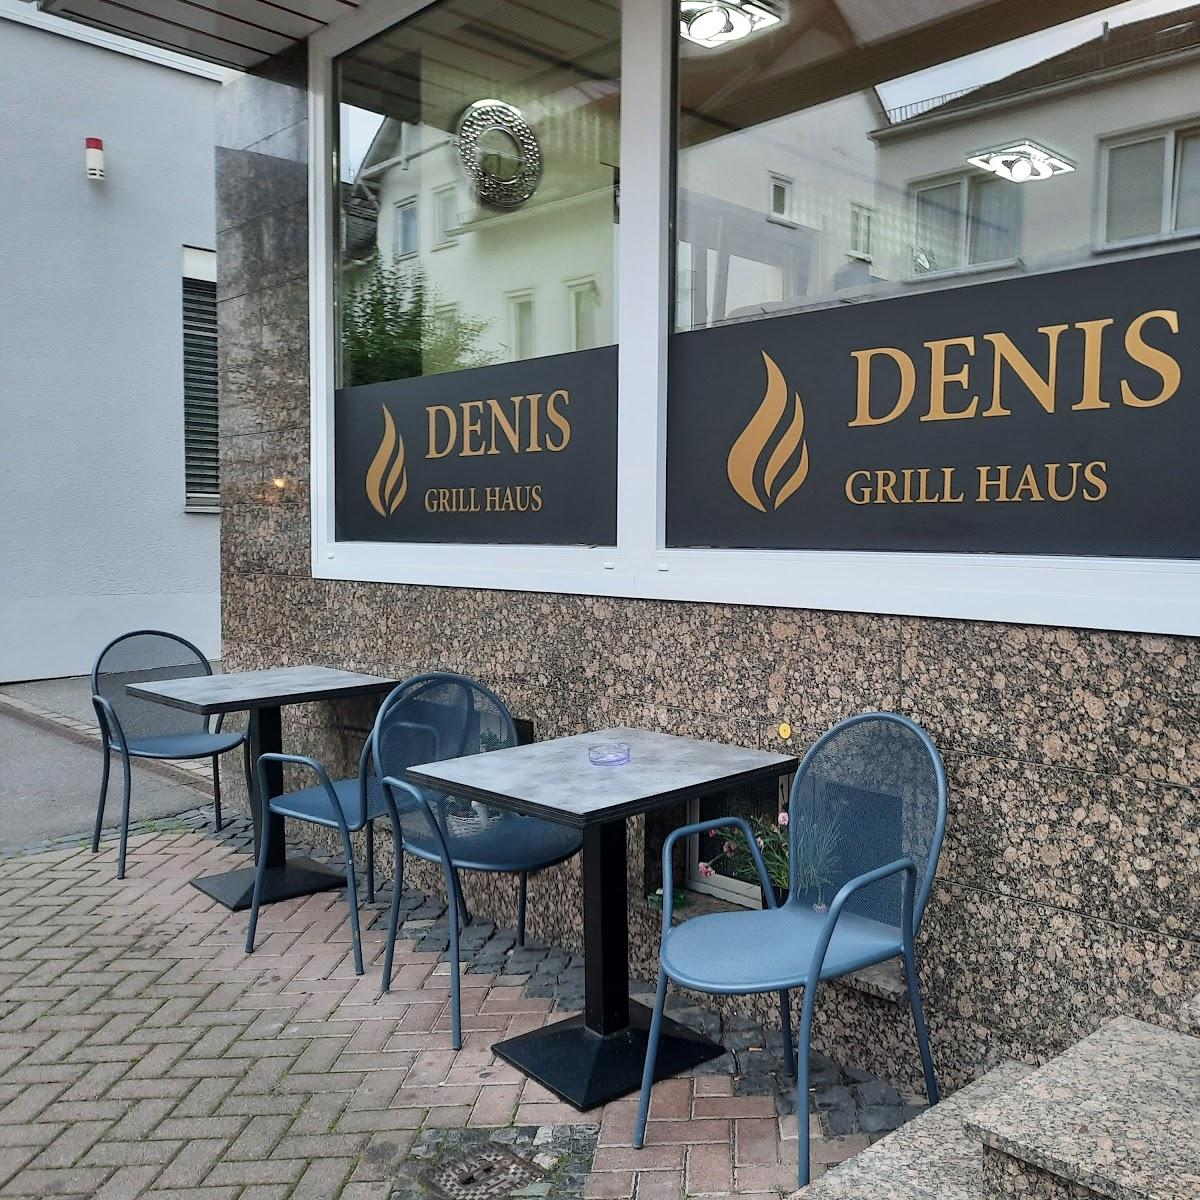 Restaurant "Denis Grill Haus" in Nastätten